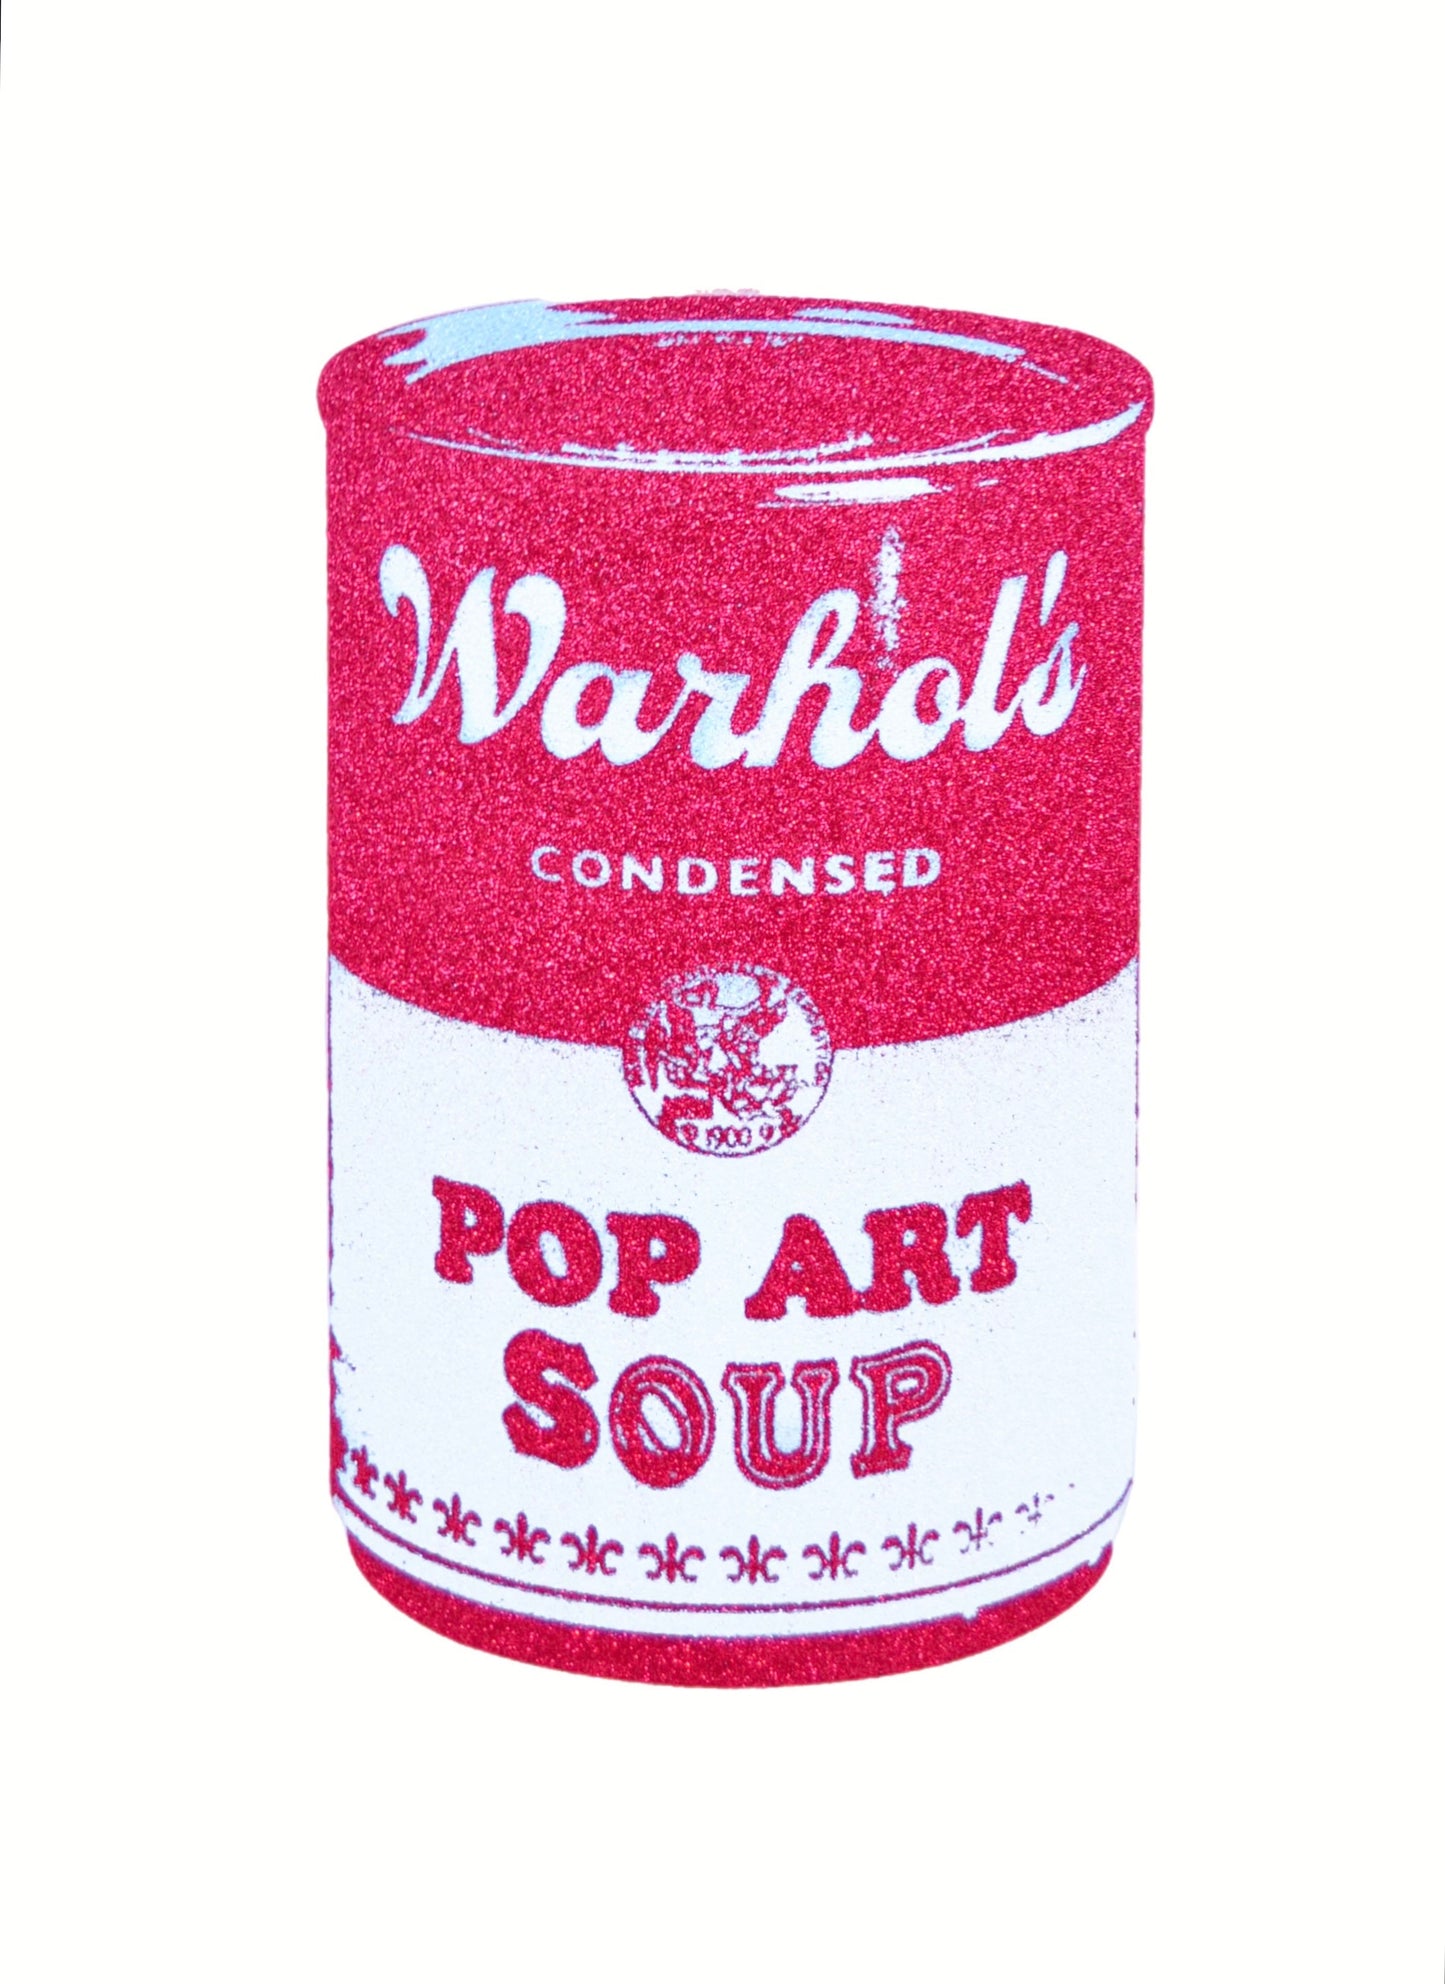 Pop Art Soup, 2013, Tomato Red